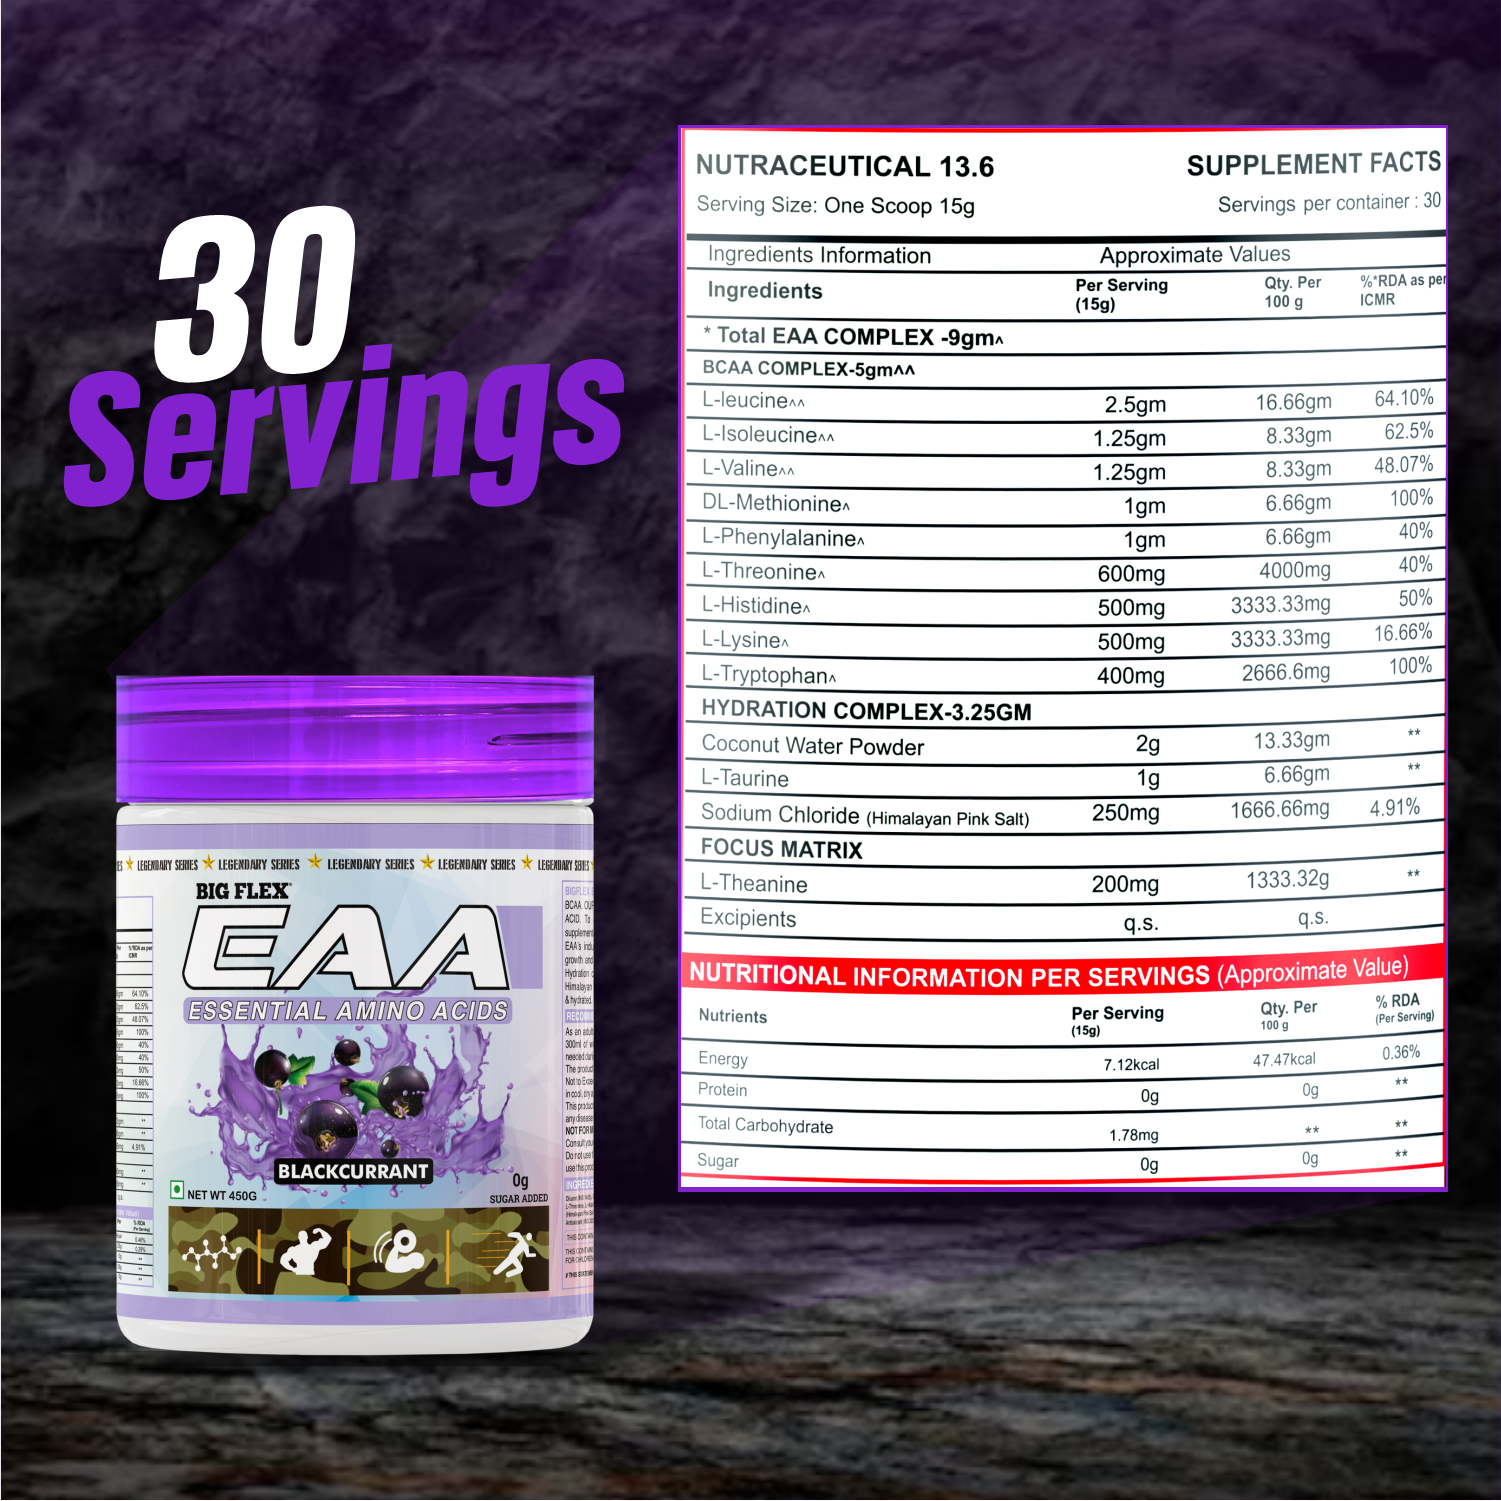 Bigflex EAA (Essential amino acids) - (Black Currant) 450g